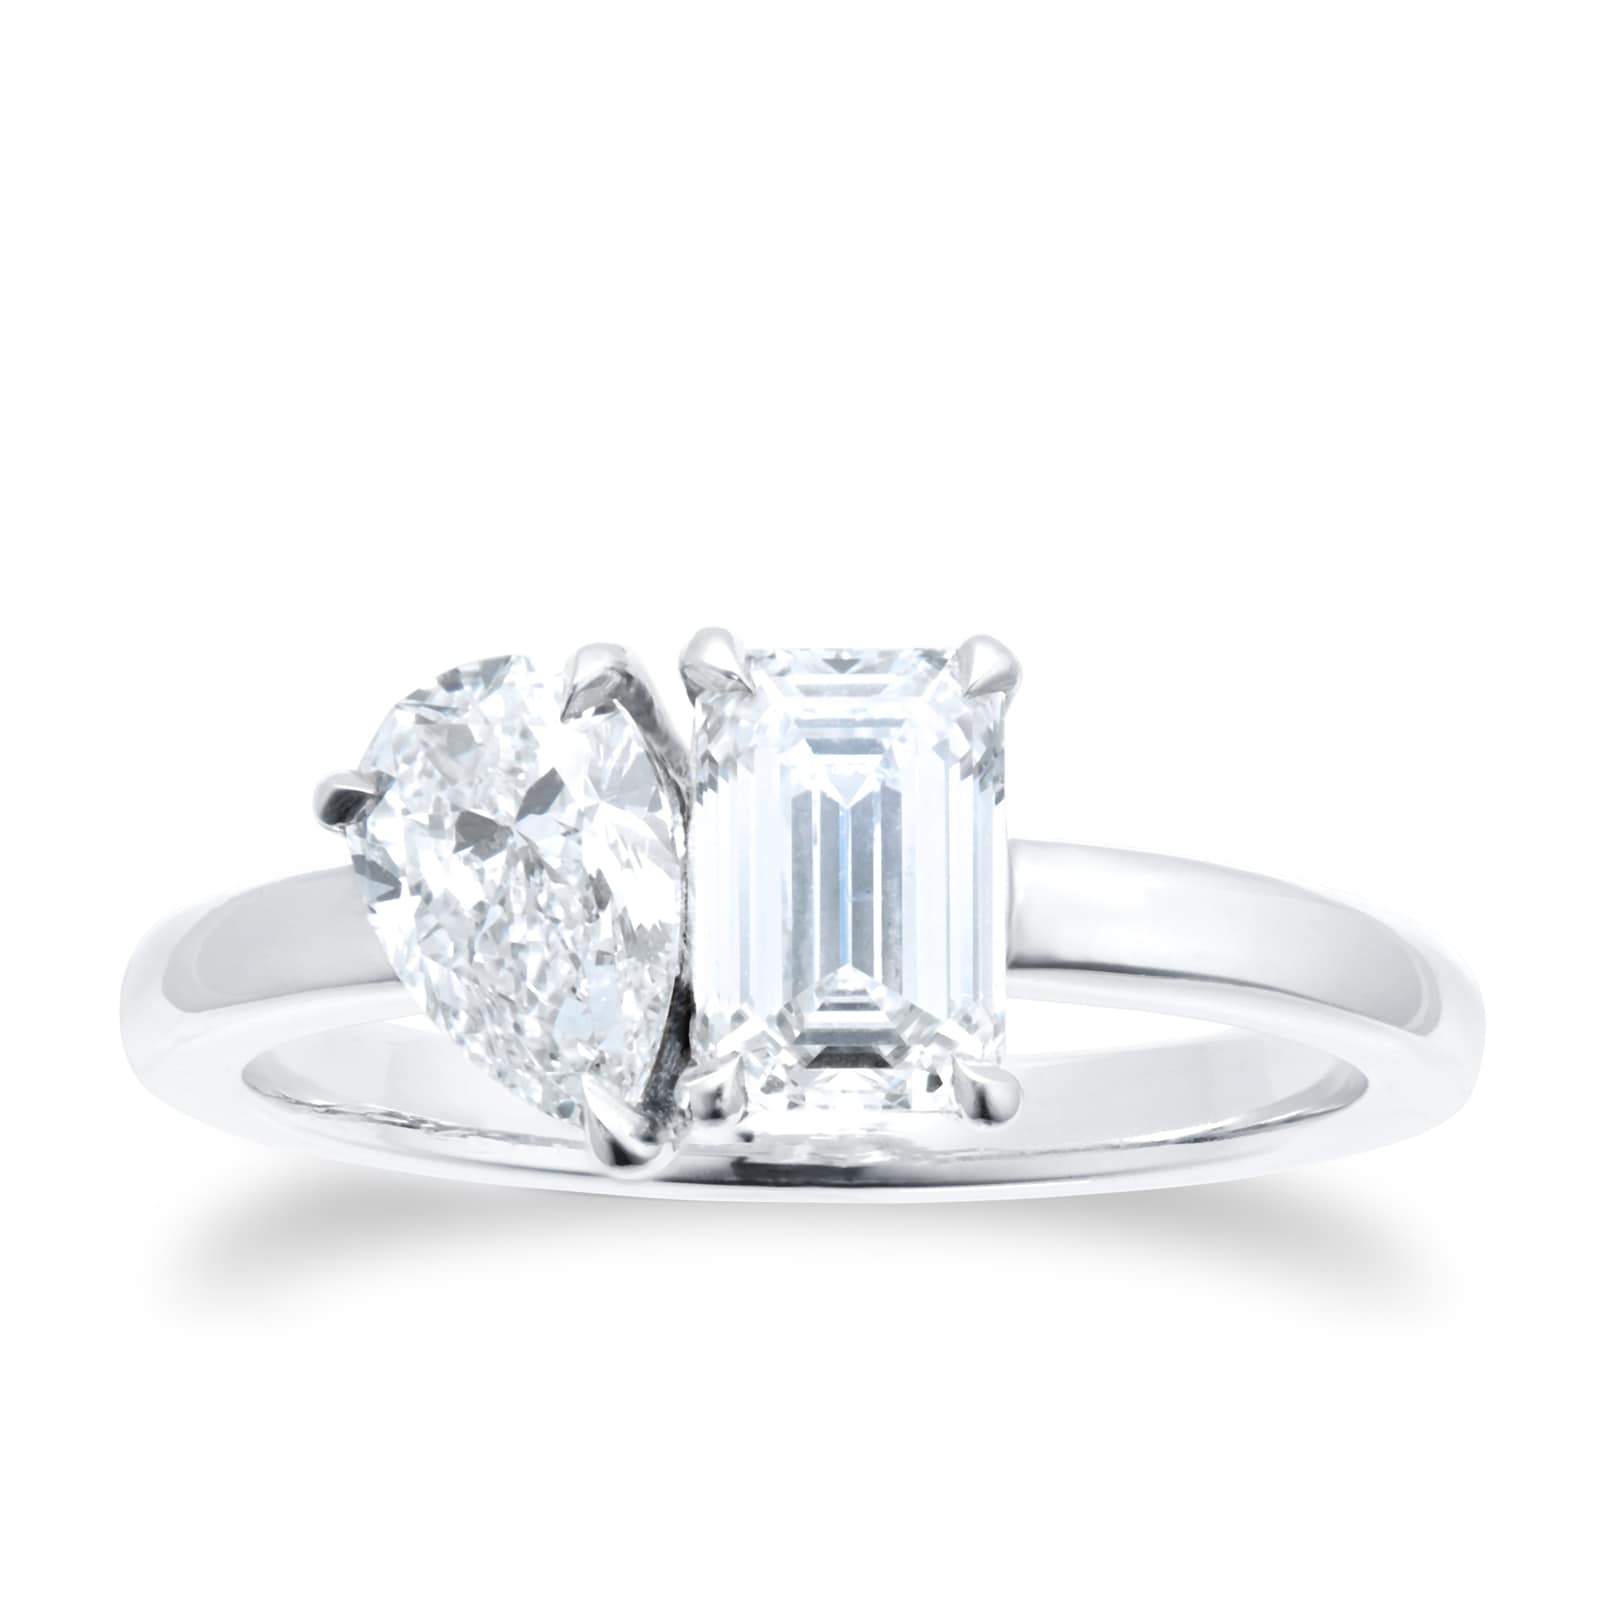 Platinum Toi et Moi 1.60cttw Pear & Emerald Cut Diamond Ring - Ring Size O